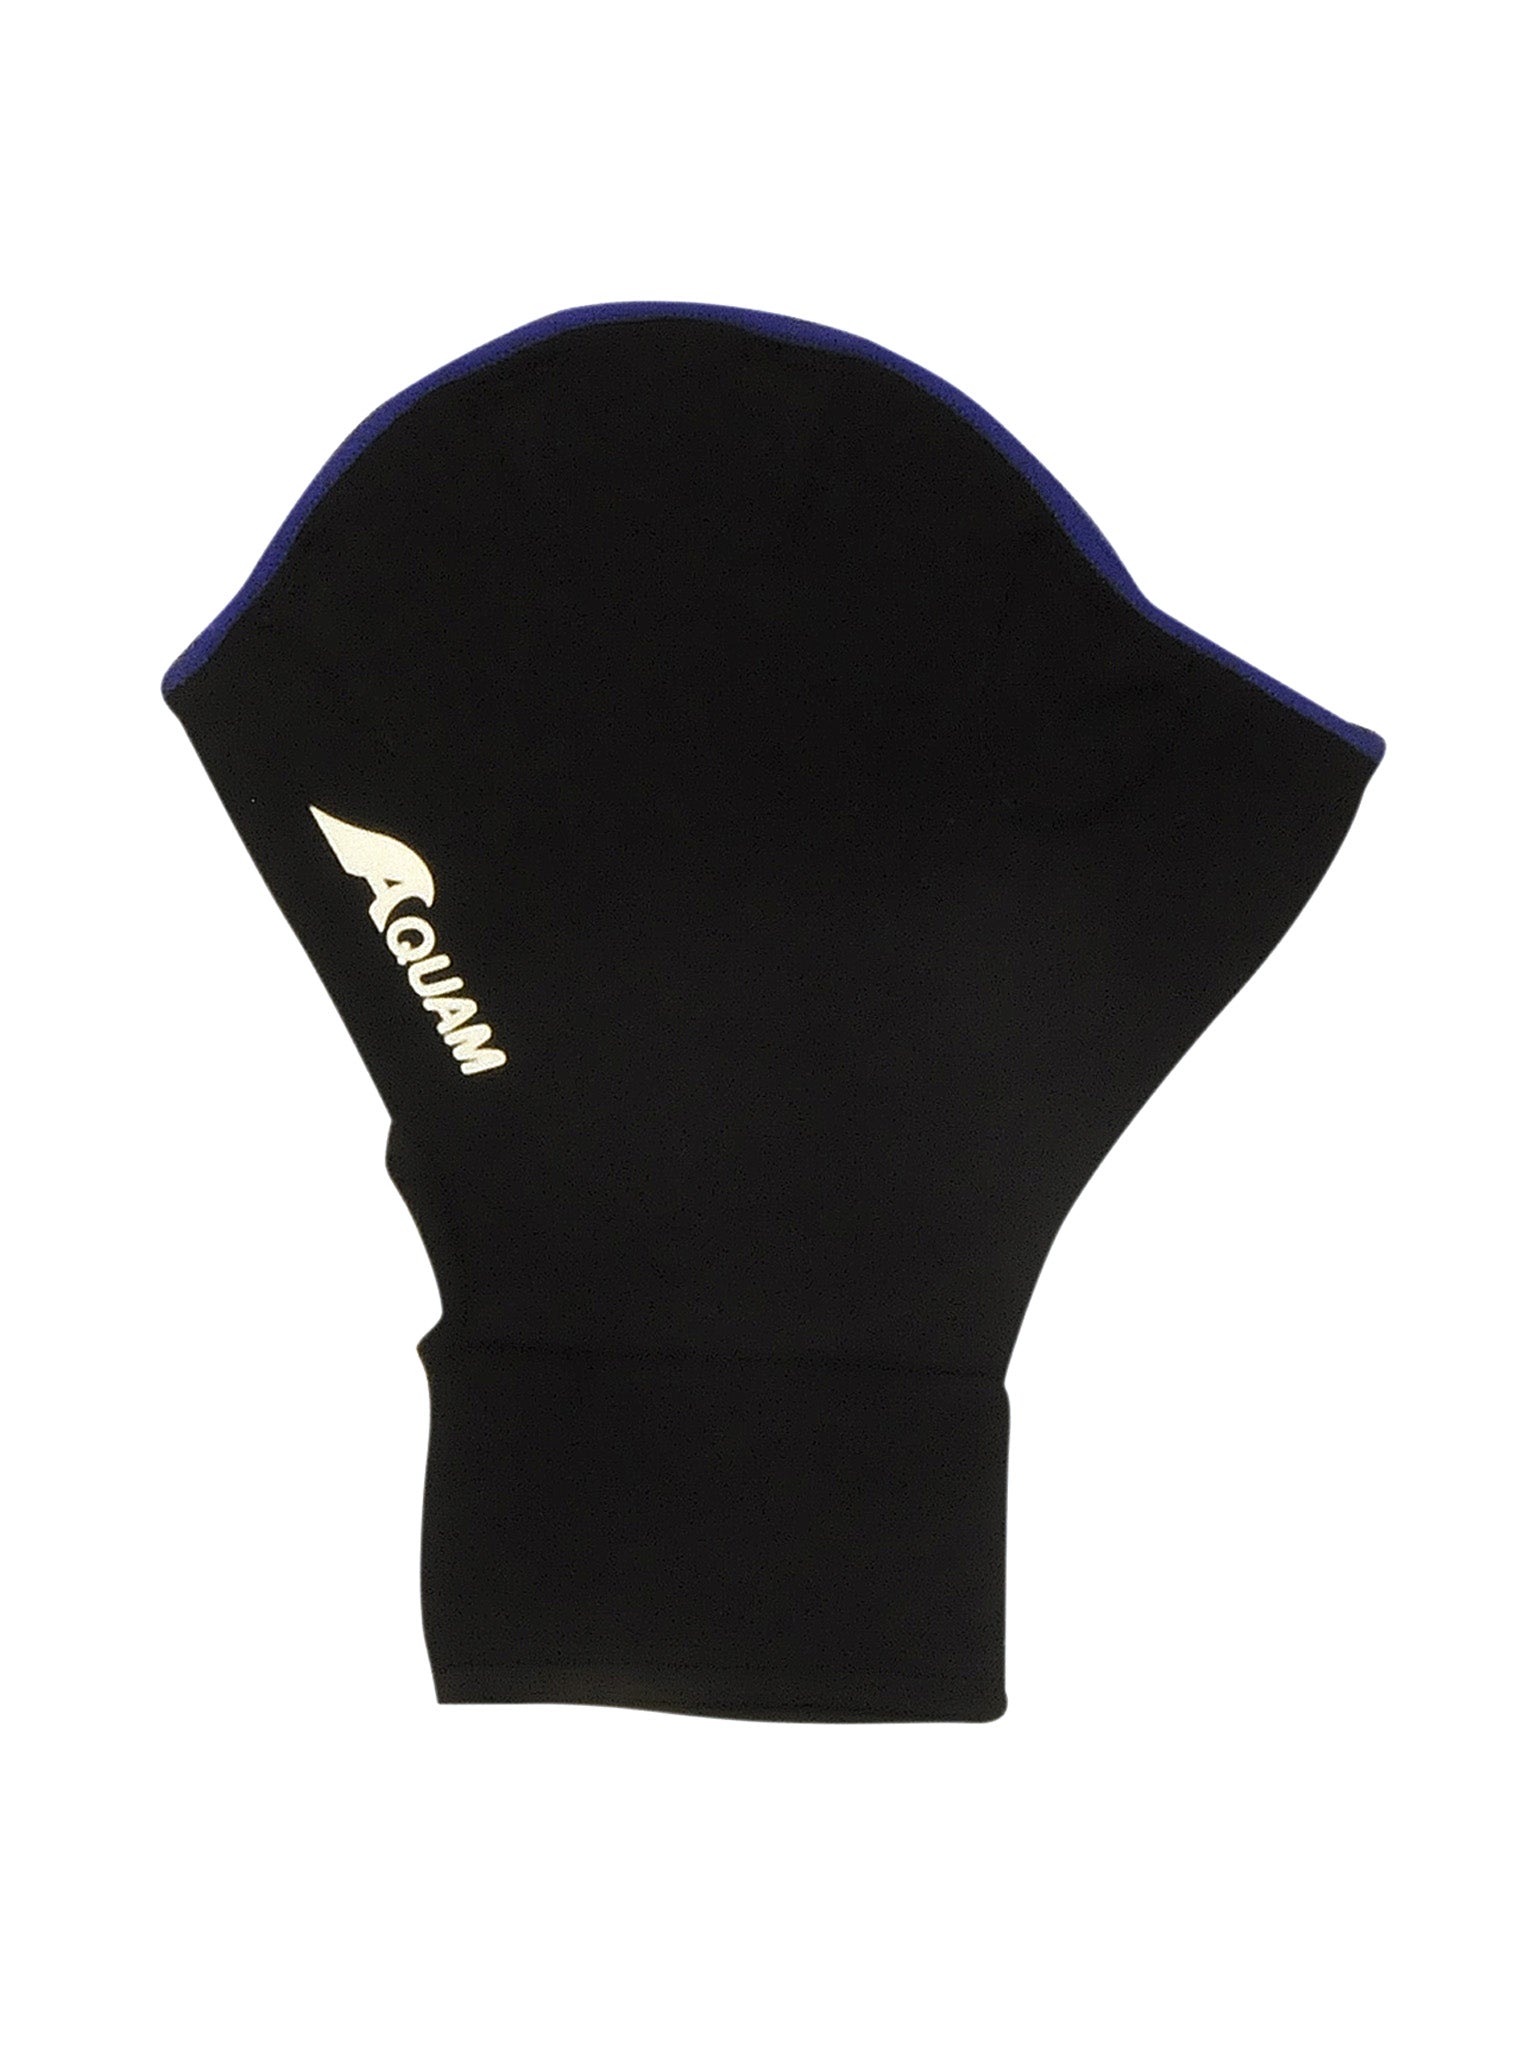 Aquafitness Webbed Gloves